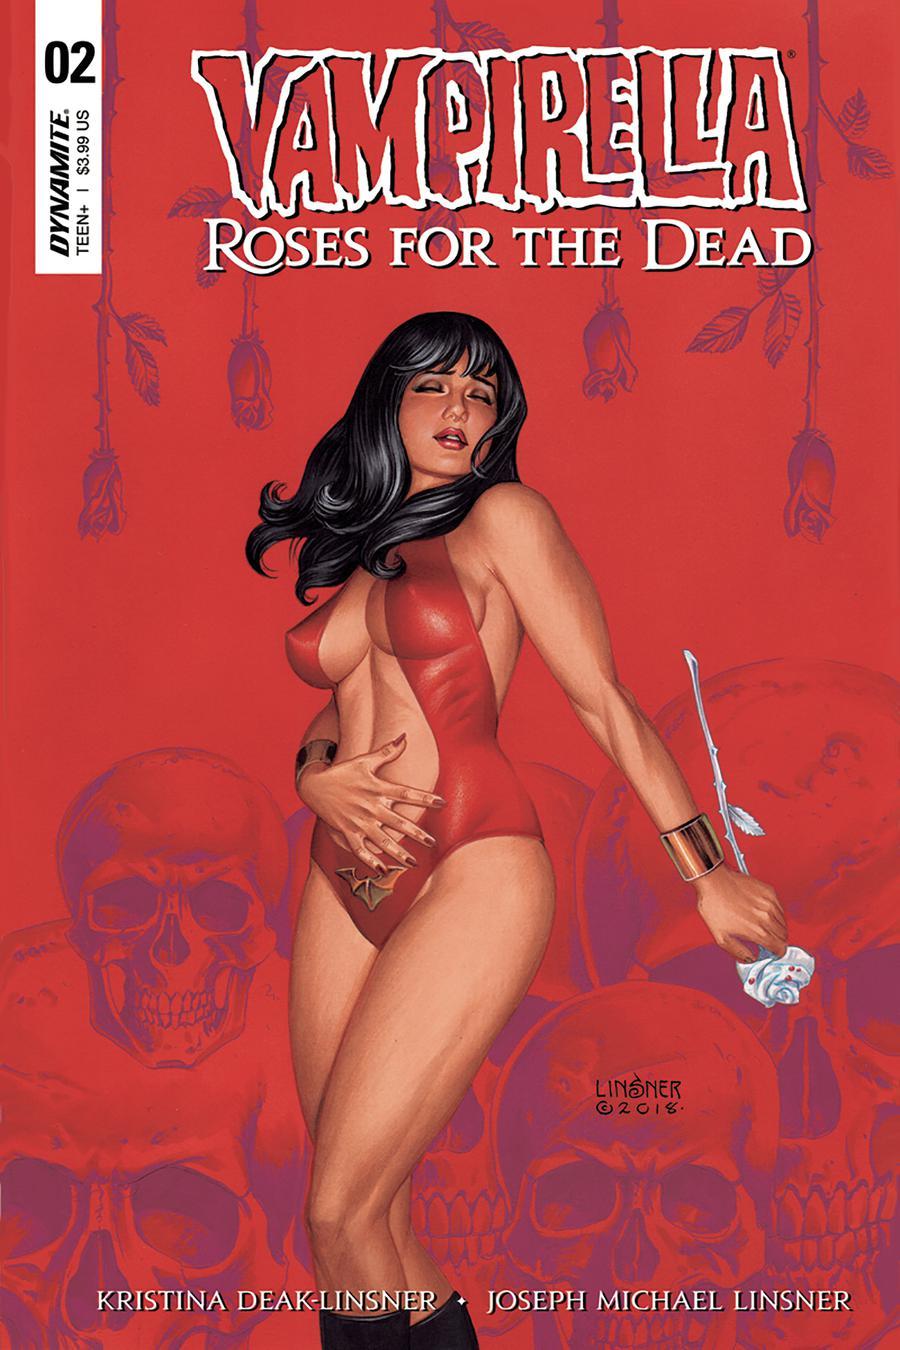 Vampirella Roses For The Dead Vol. 1 #2